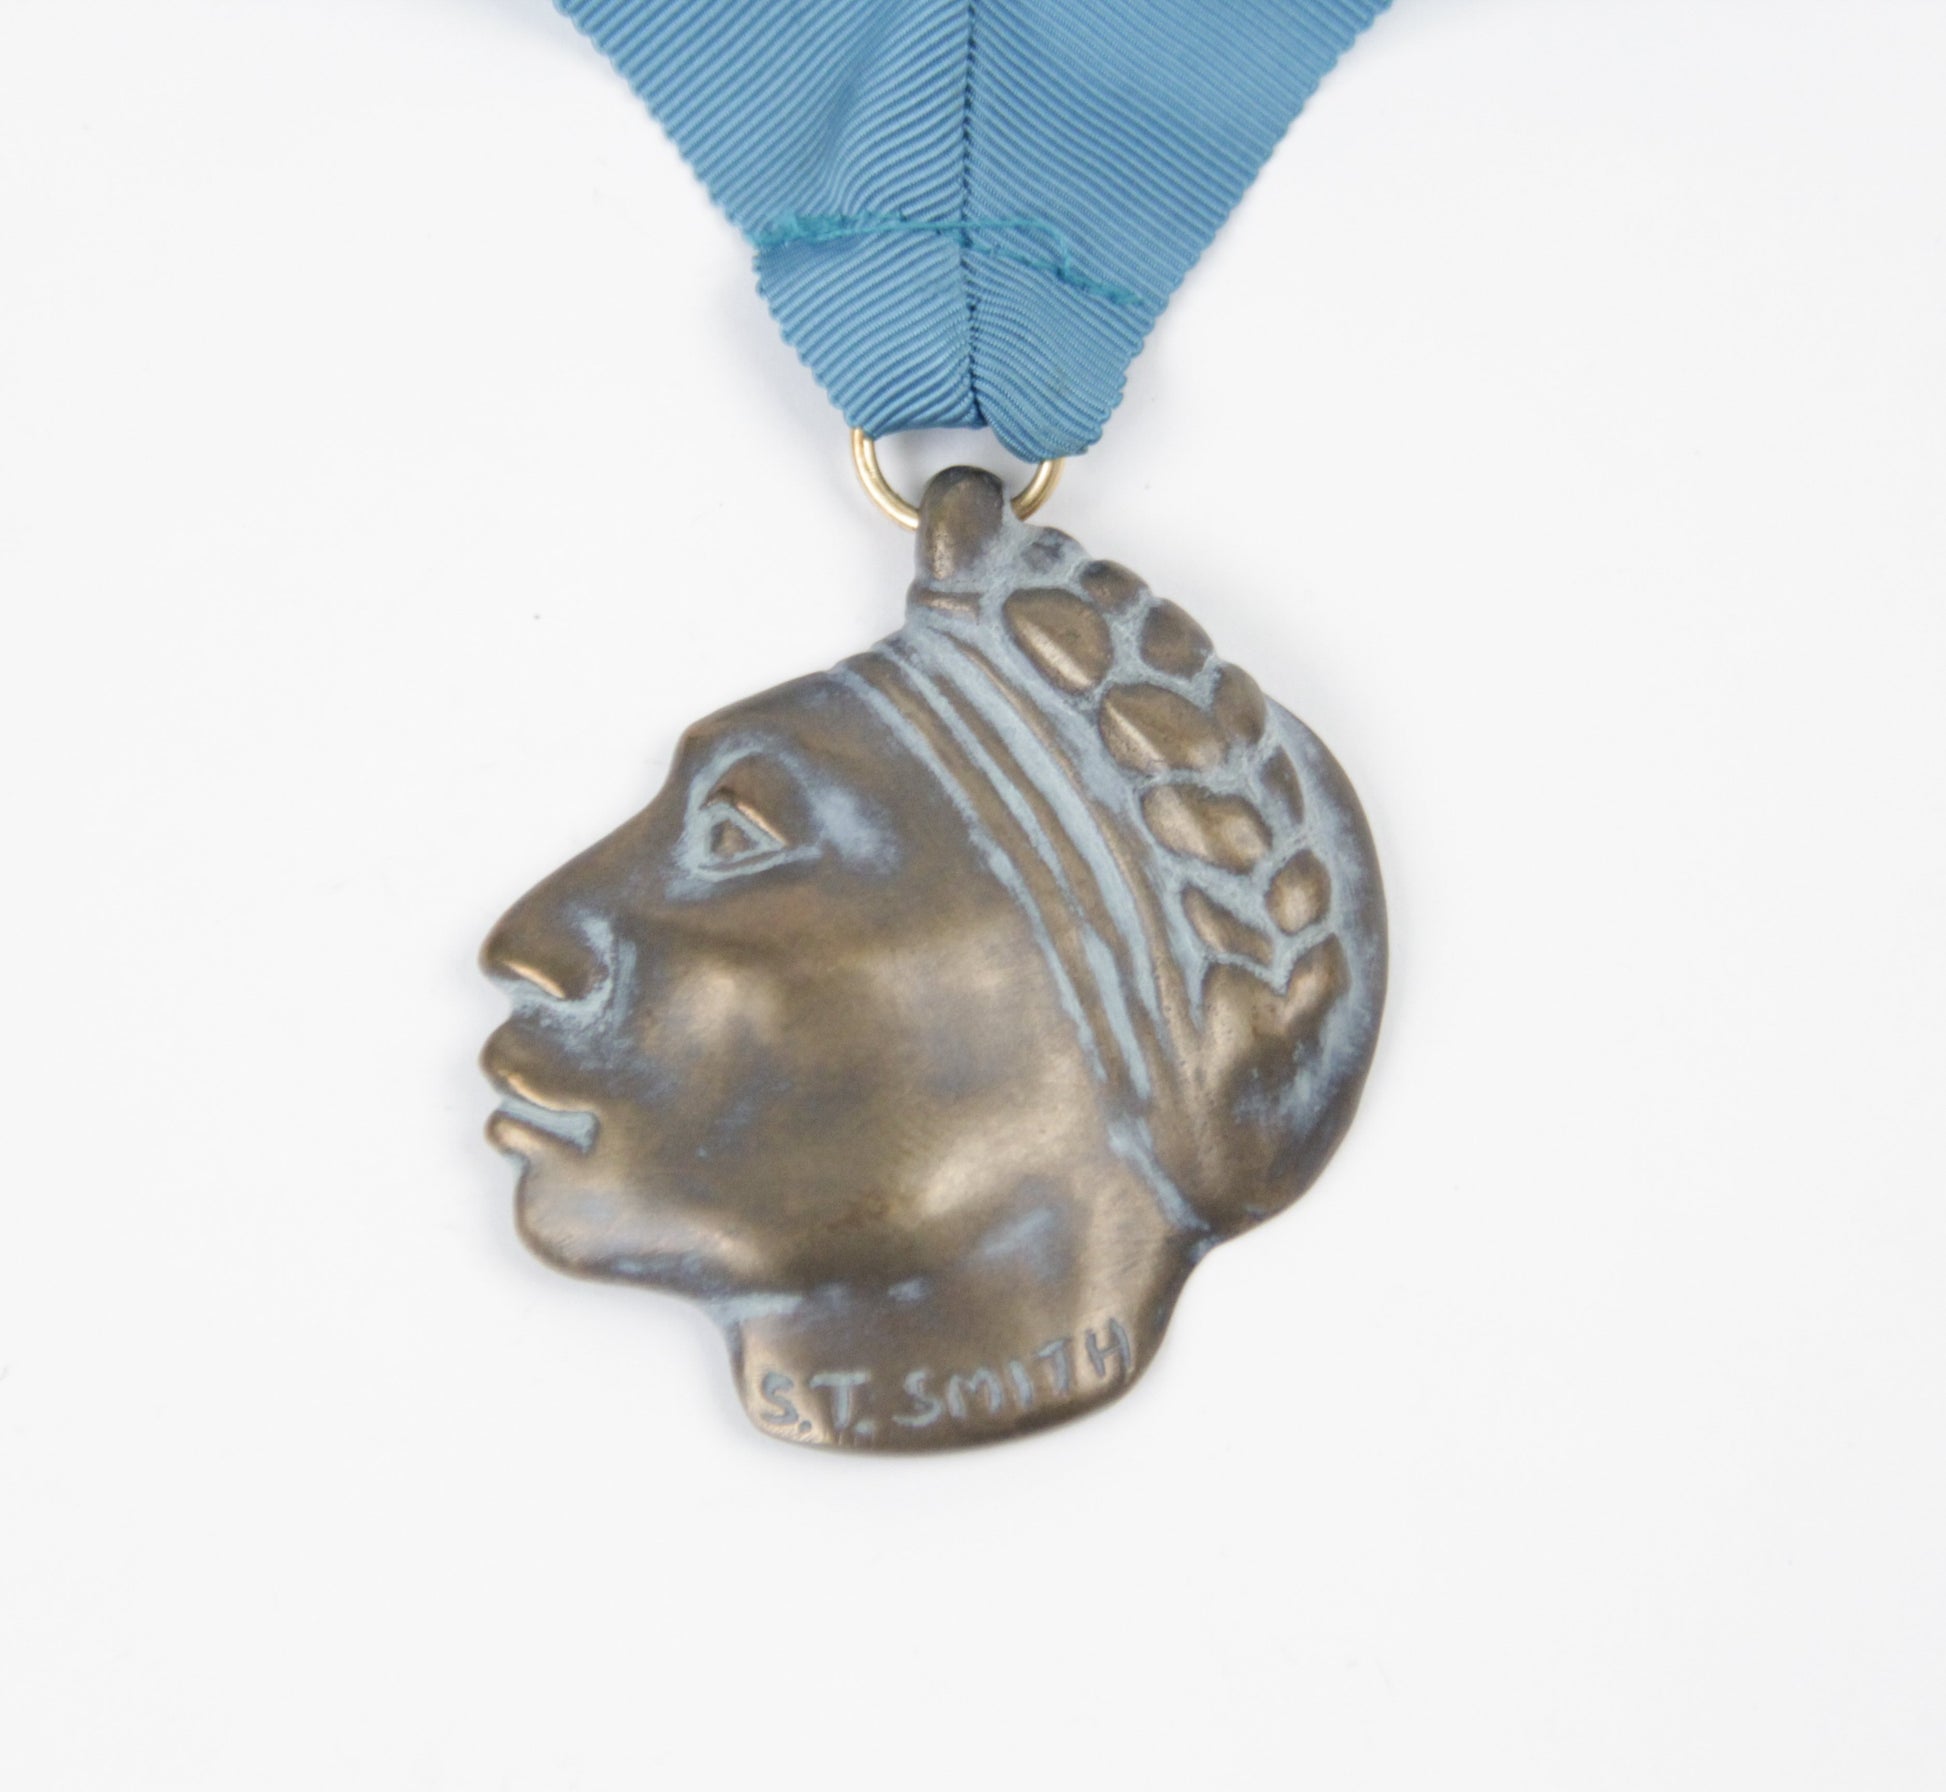 1991 prix de west medallion medal bronze shirley thomson-smith sculptor face profile